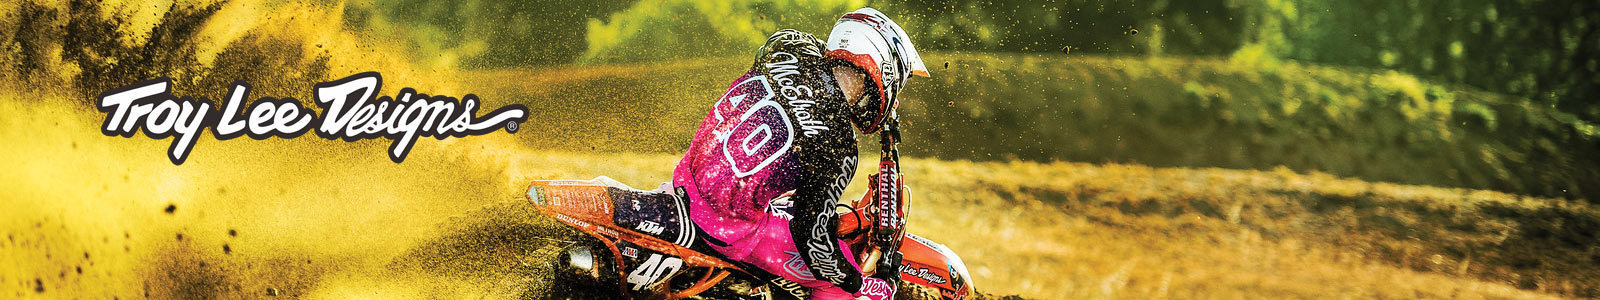 Troy-Lee-Designs-Motocross-Handschuhe